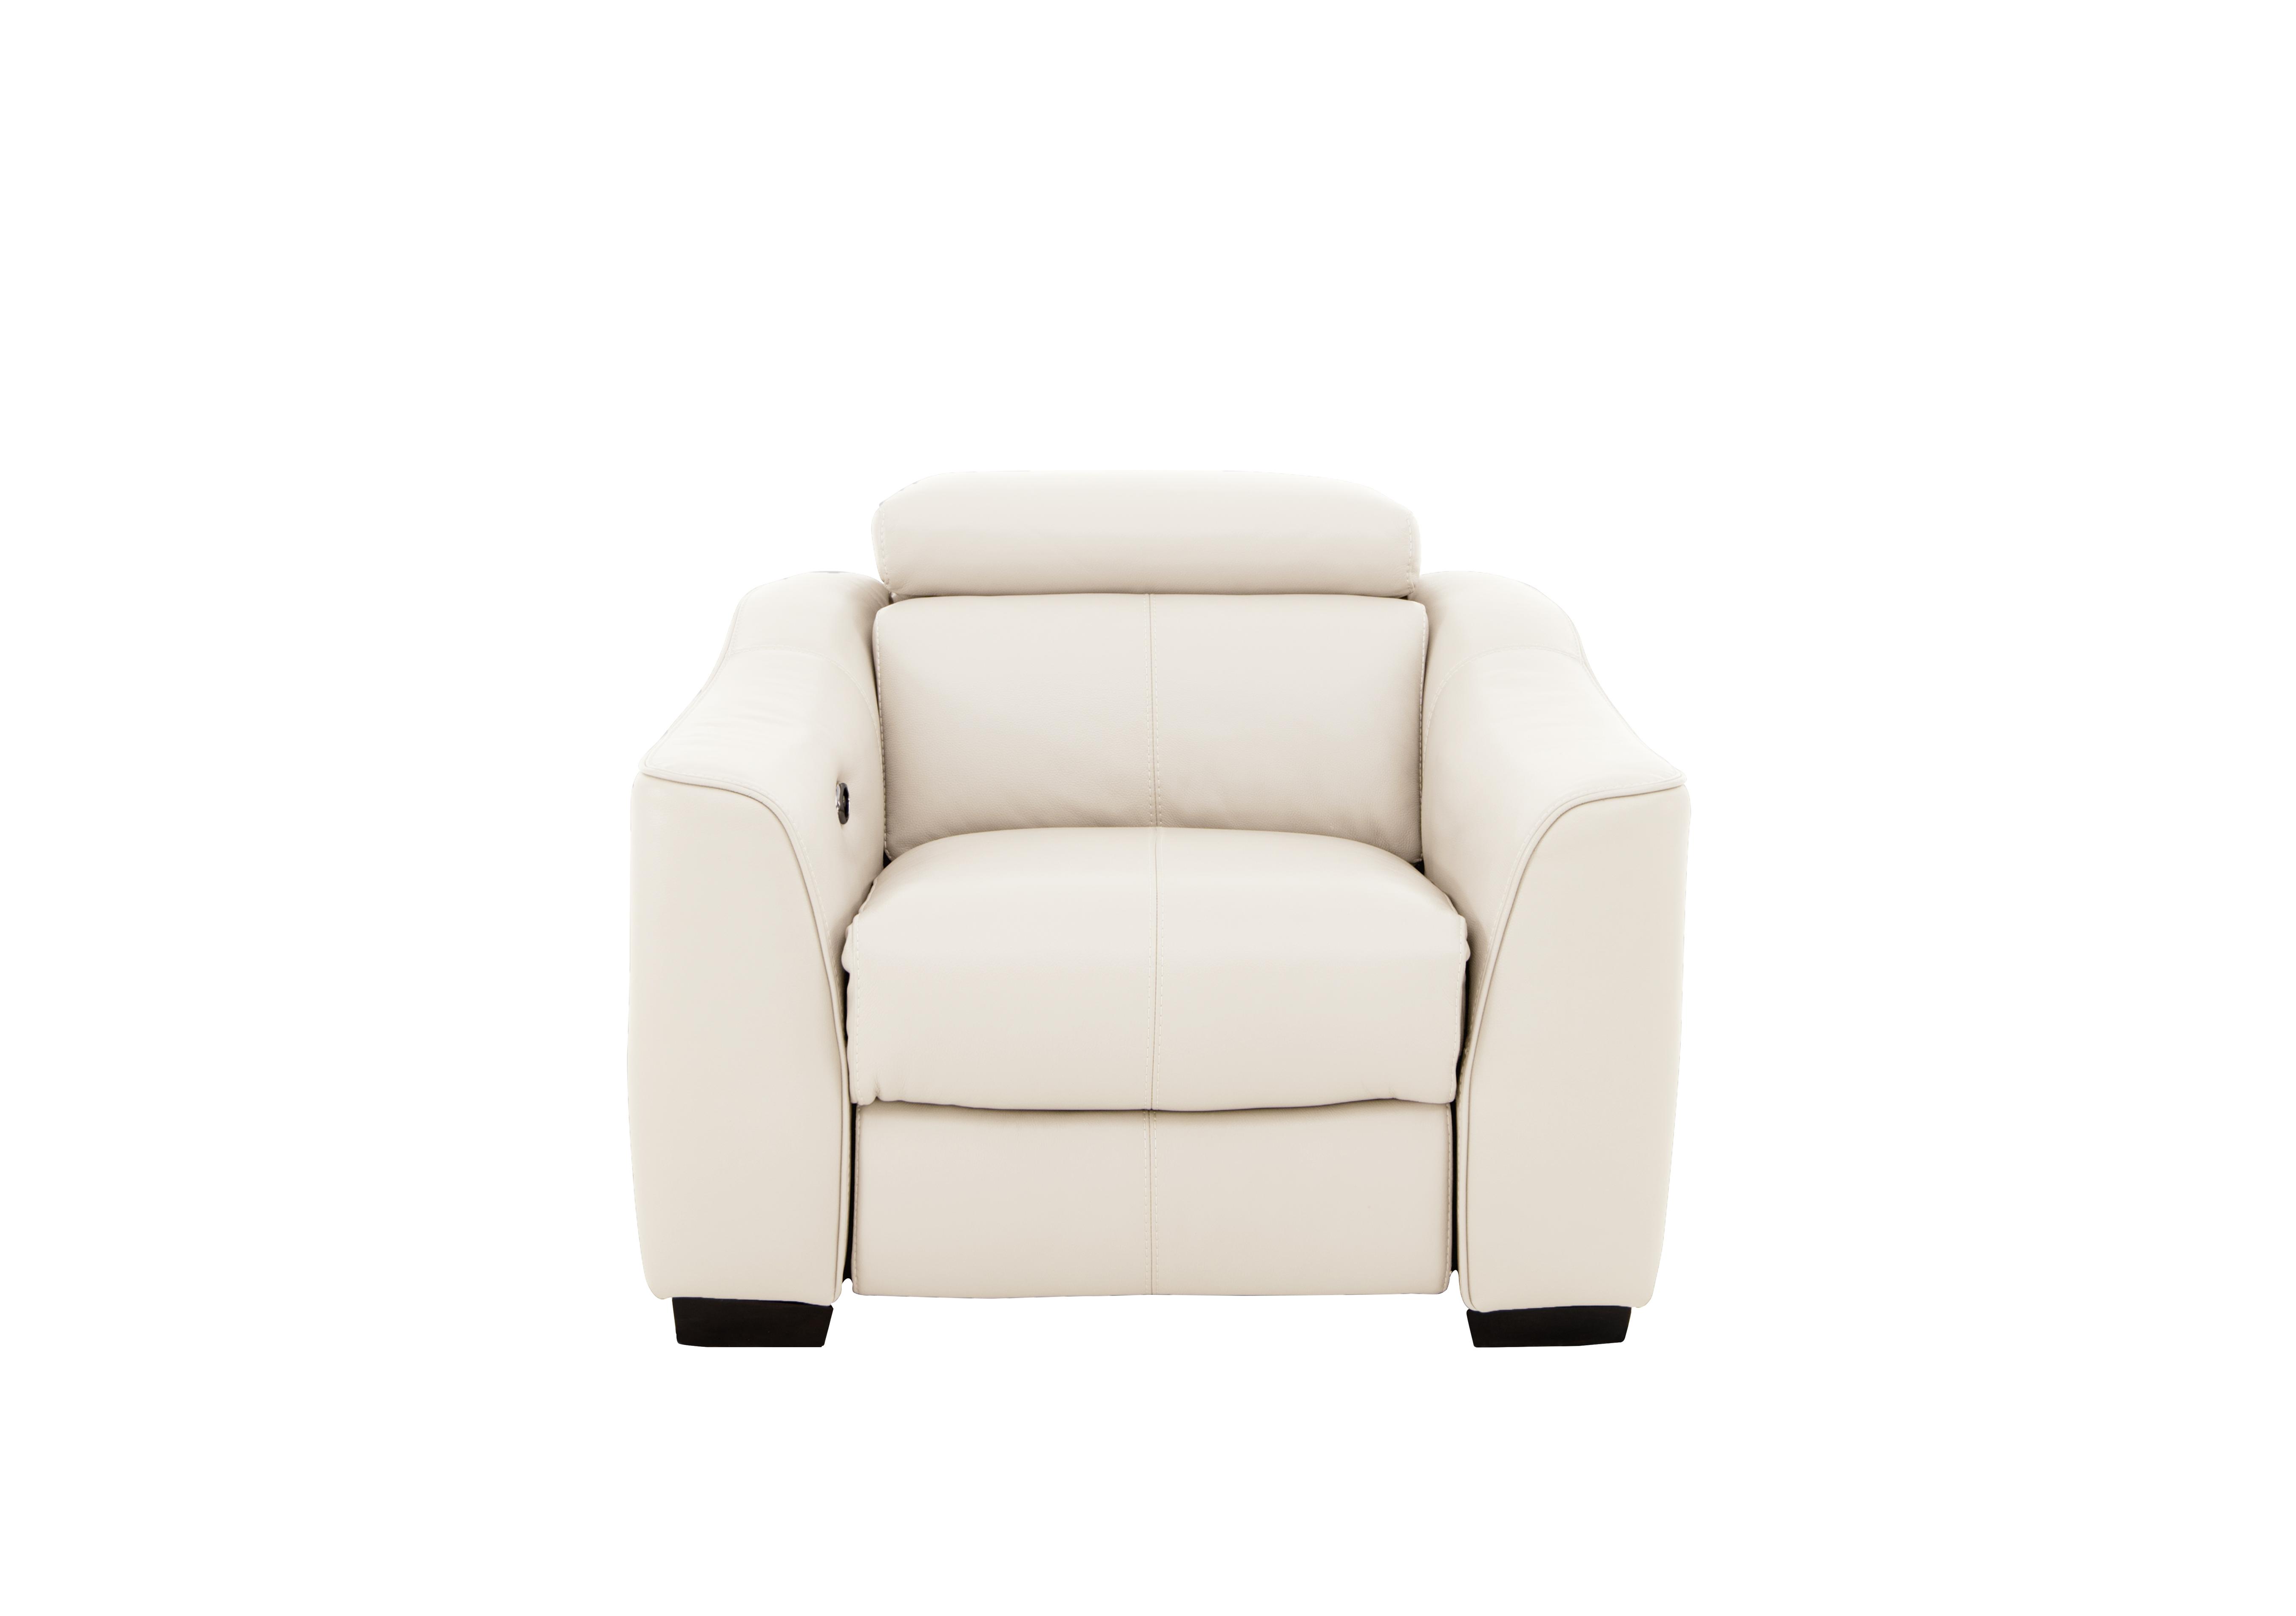 Elixir Leather Armchair in Bv-744d Star White on Furniture Village